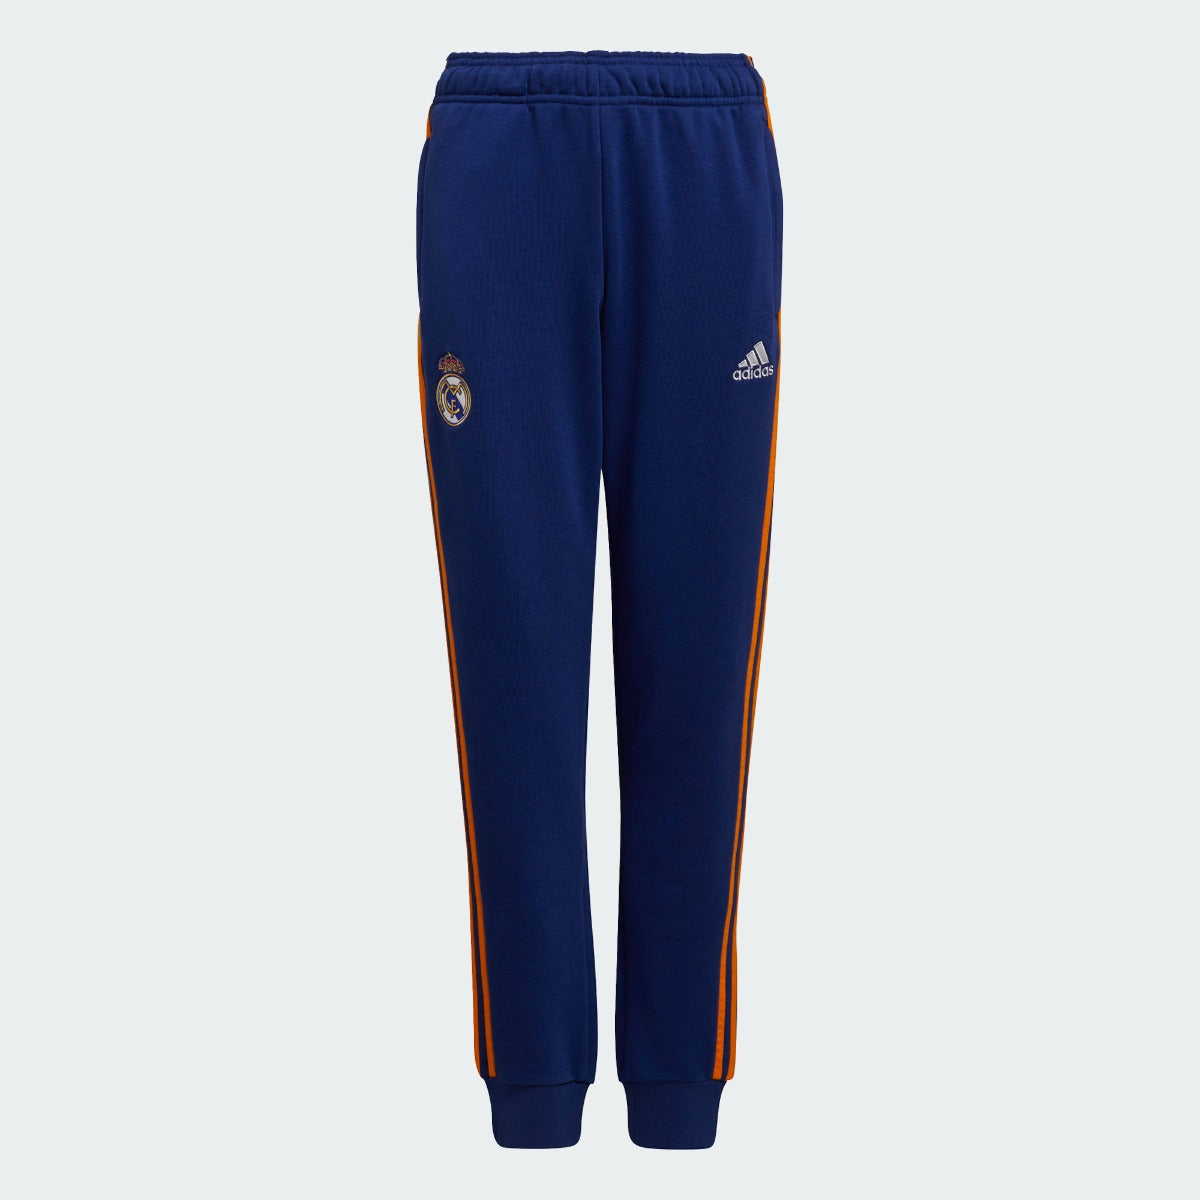 Adidas 2021-22 Real Madrid Youth Sweatpants - Navy-Orange (Front)